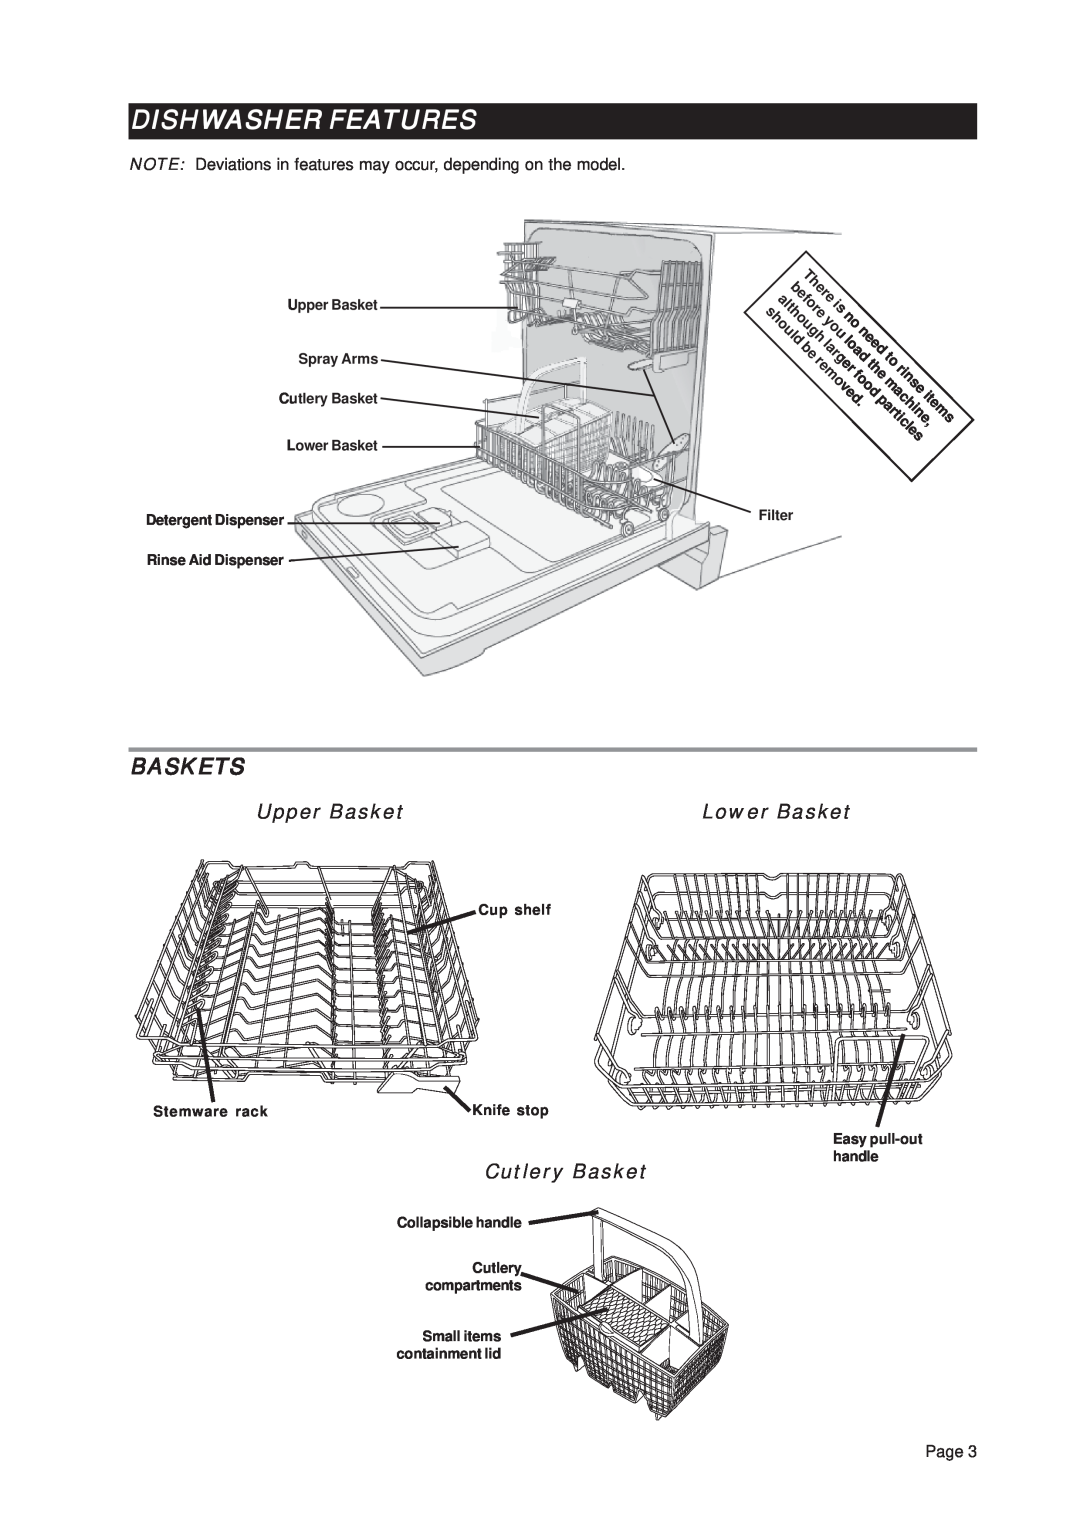 Asko D3112 Dishwasher Features, Baskets, beforeis, rinse, particles, Upper Basket, Cutlery Basket, Lower Basket, Filter 